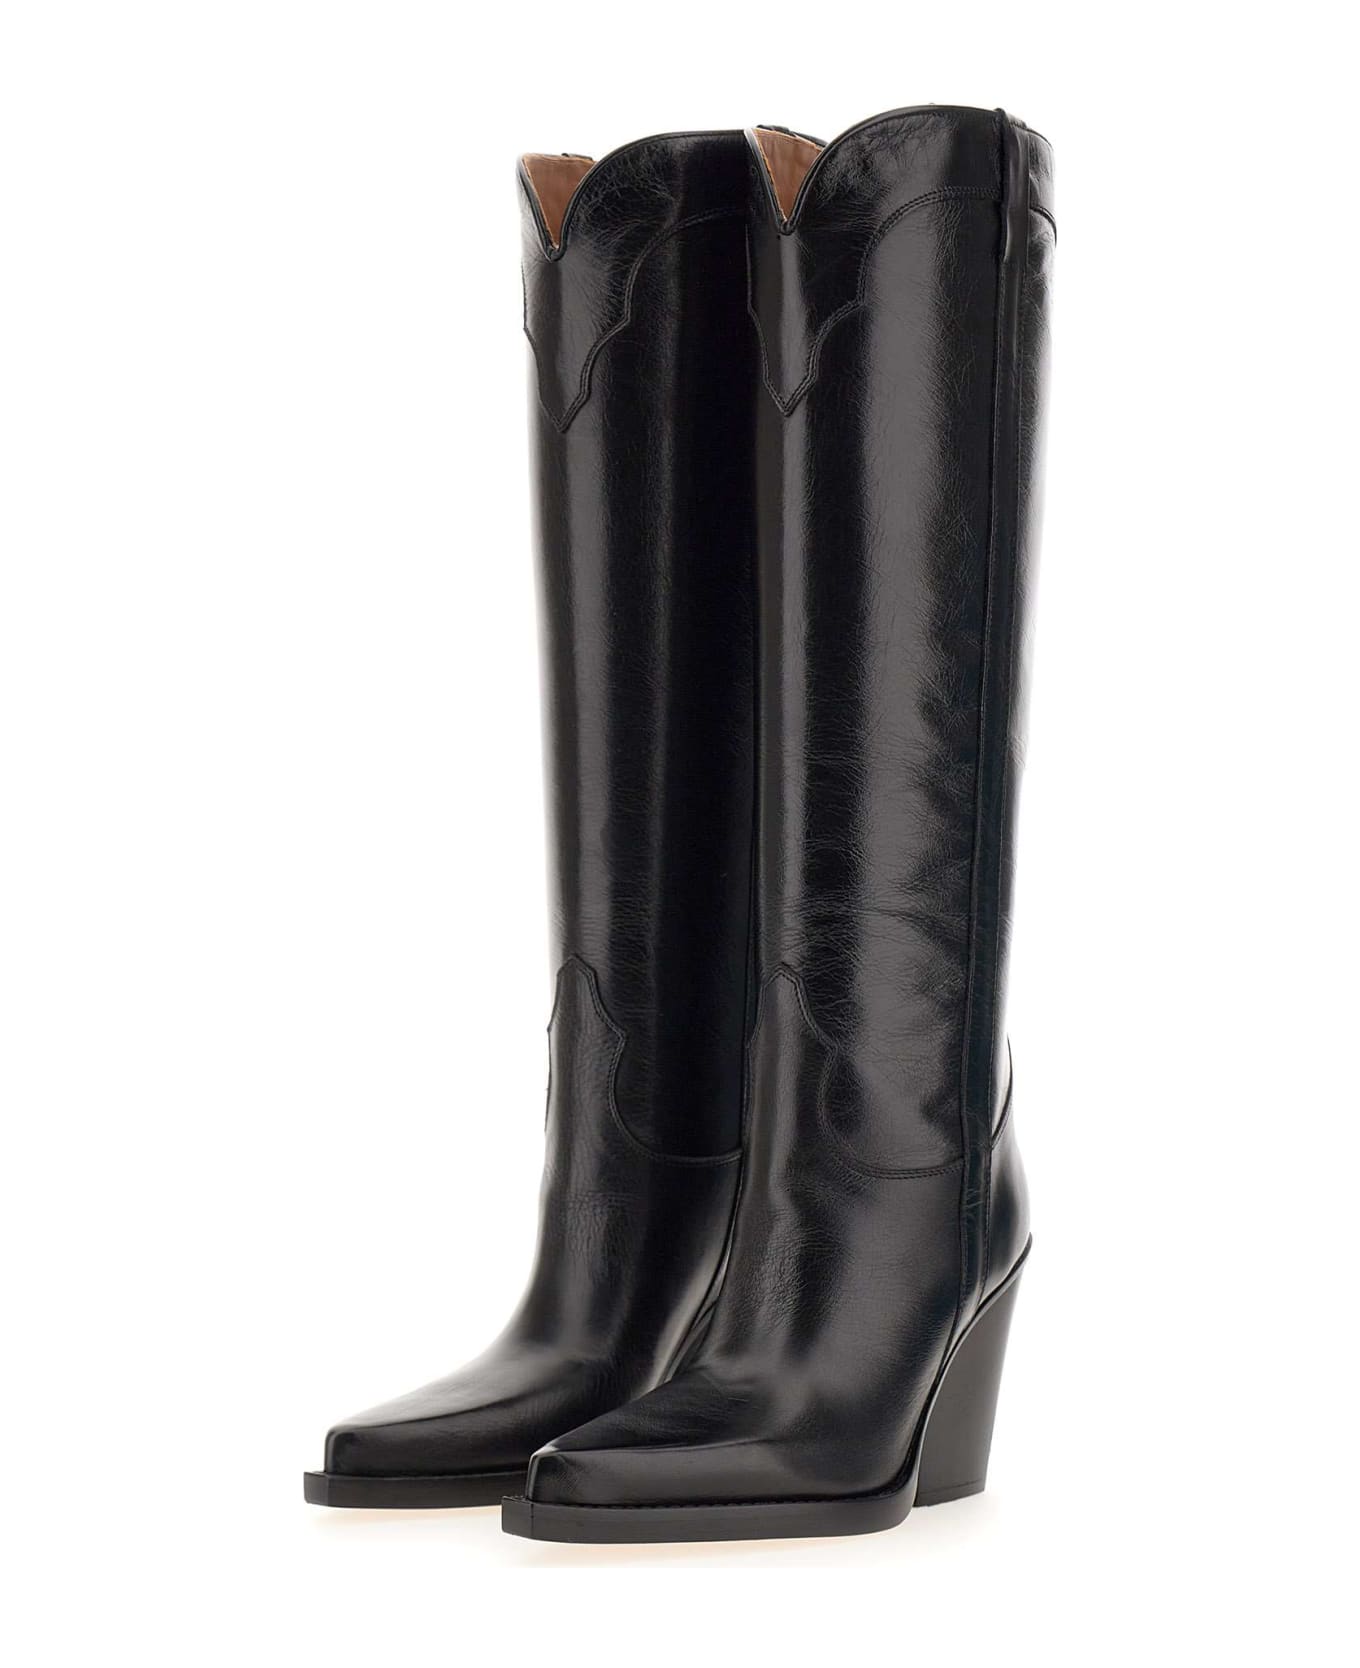 Paris Texas 'el Dorado Boots' Leather Boots - Nero ブーツ